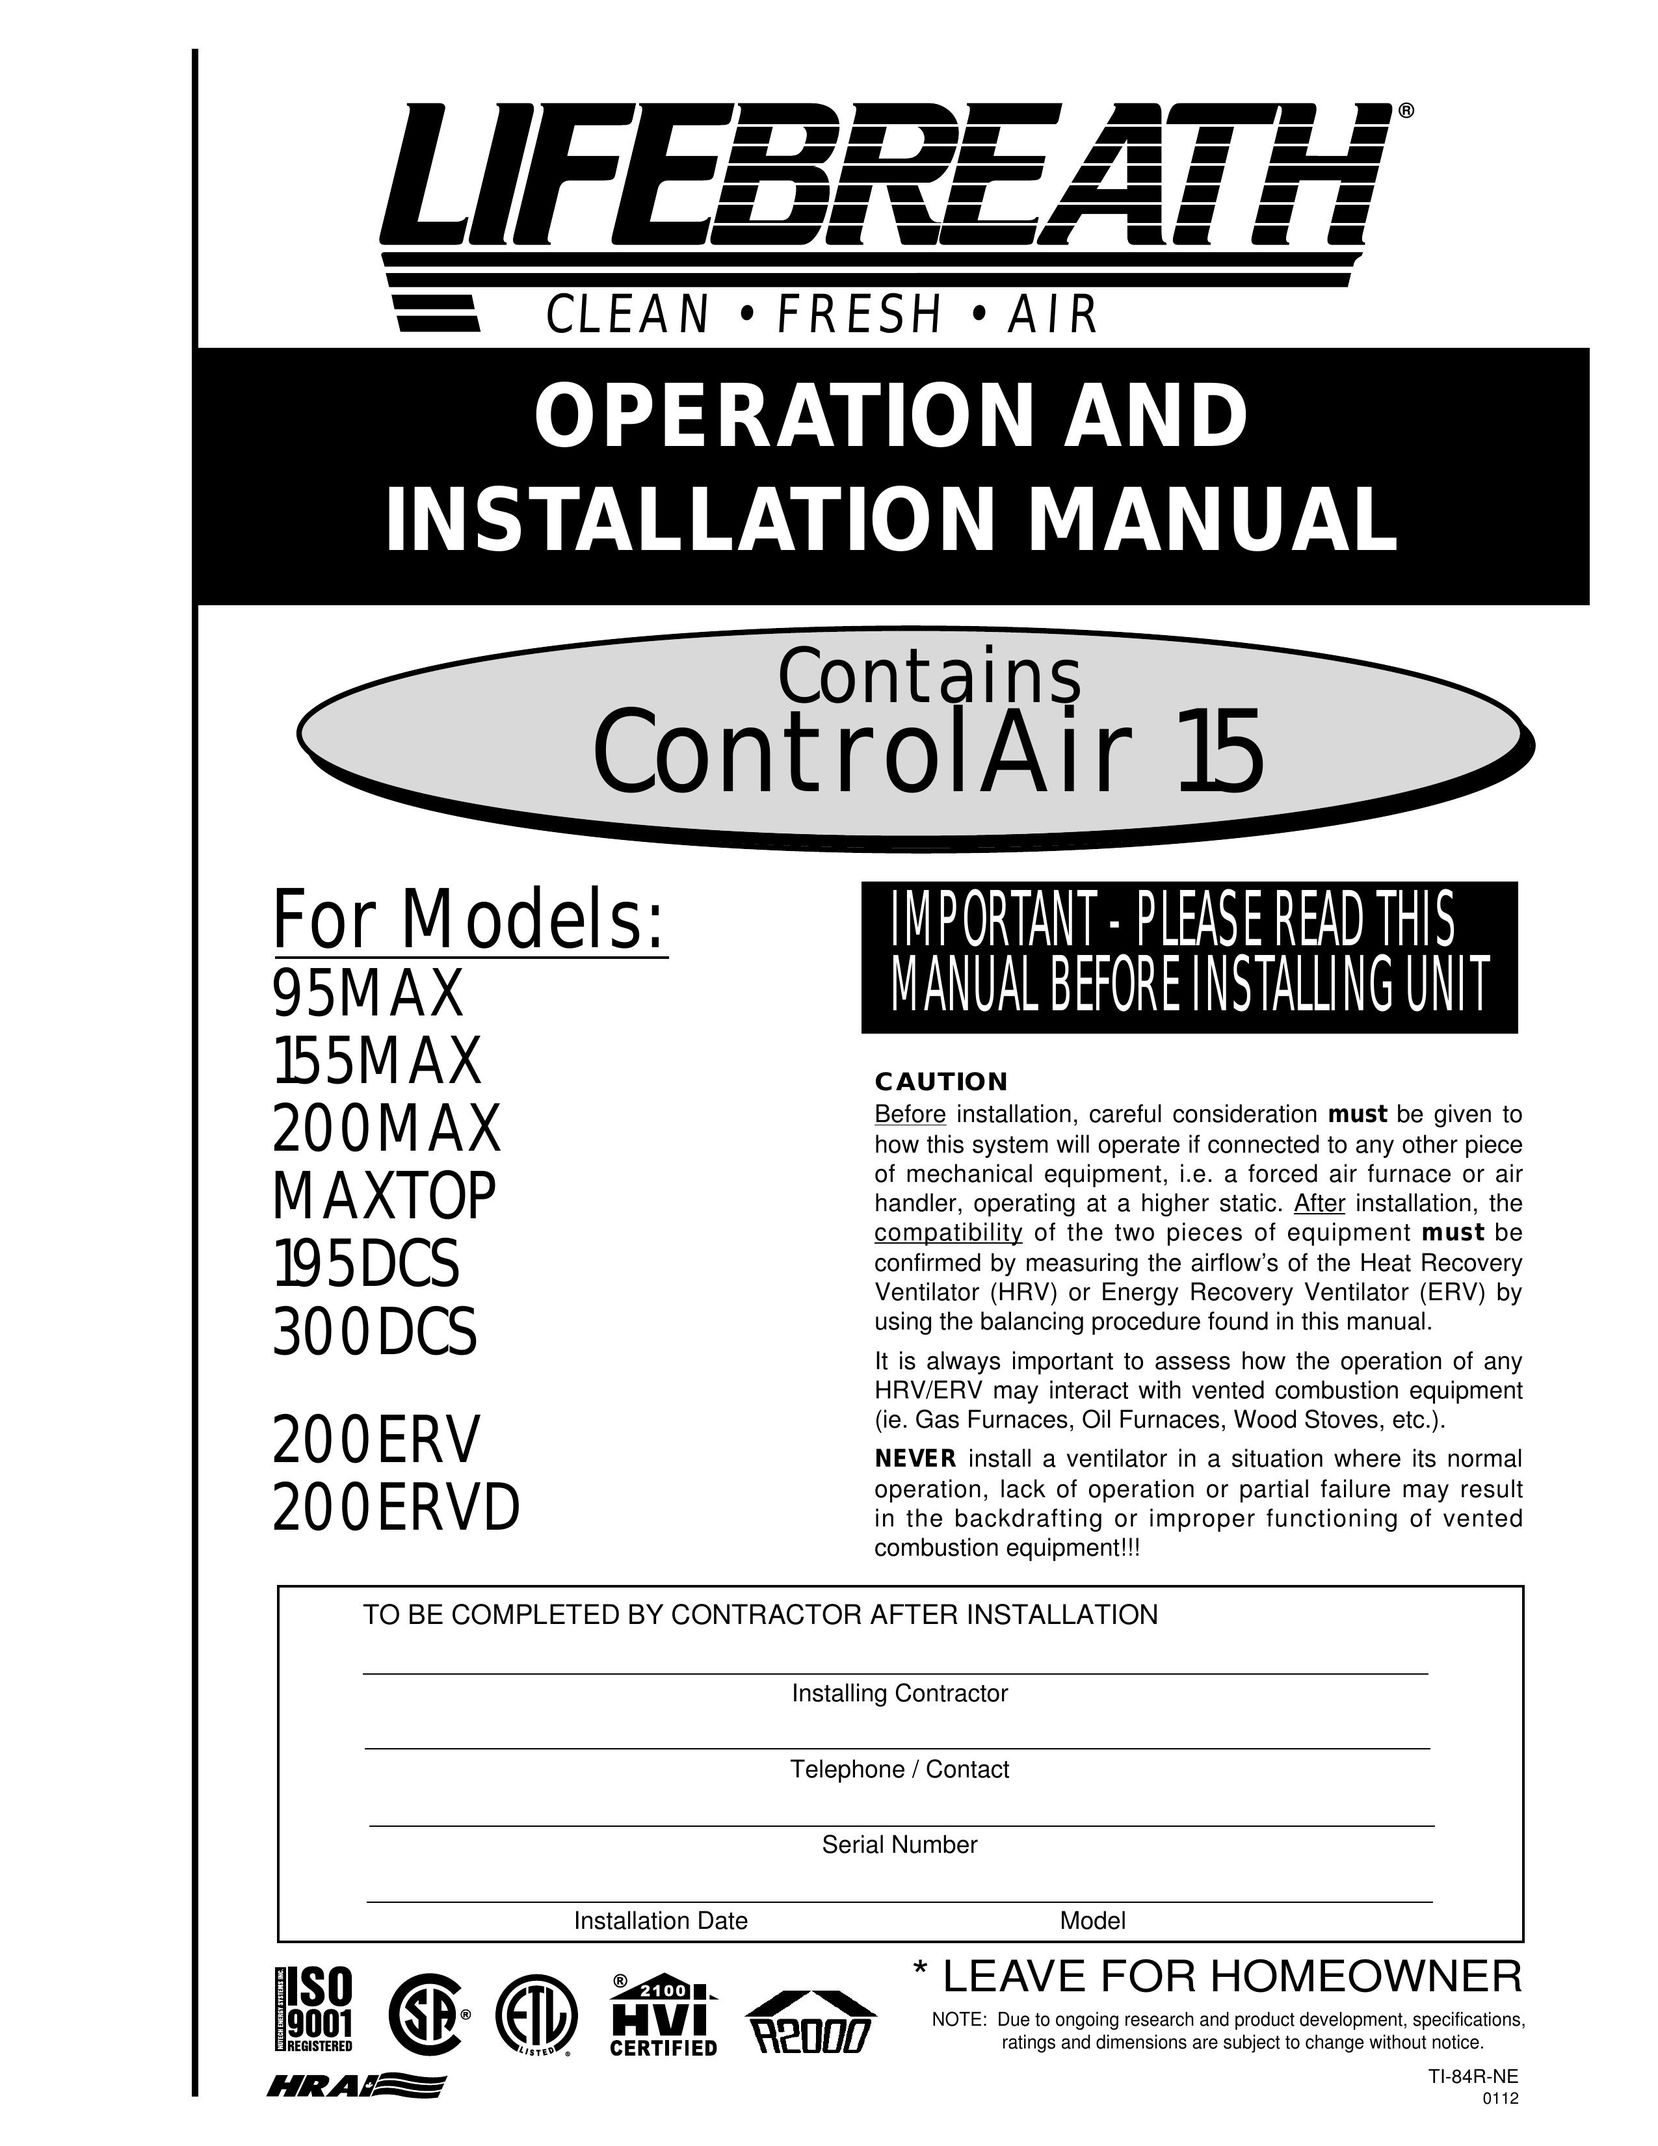 Lifebreath 200MAX Stereo Amplifier User Manual